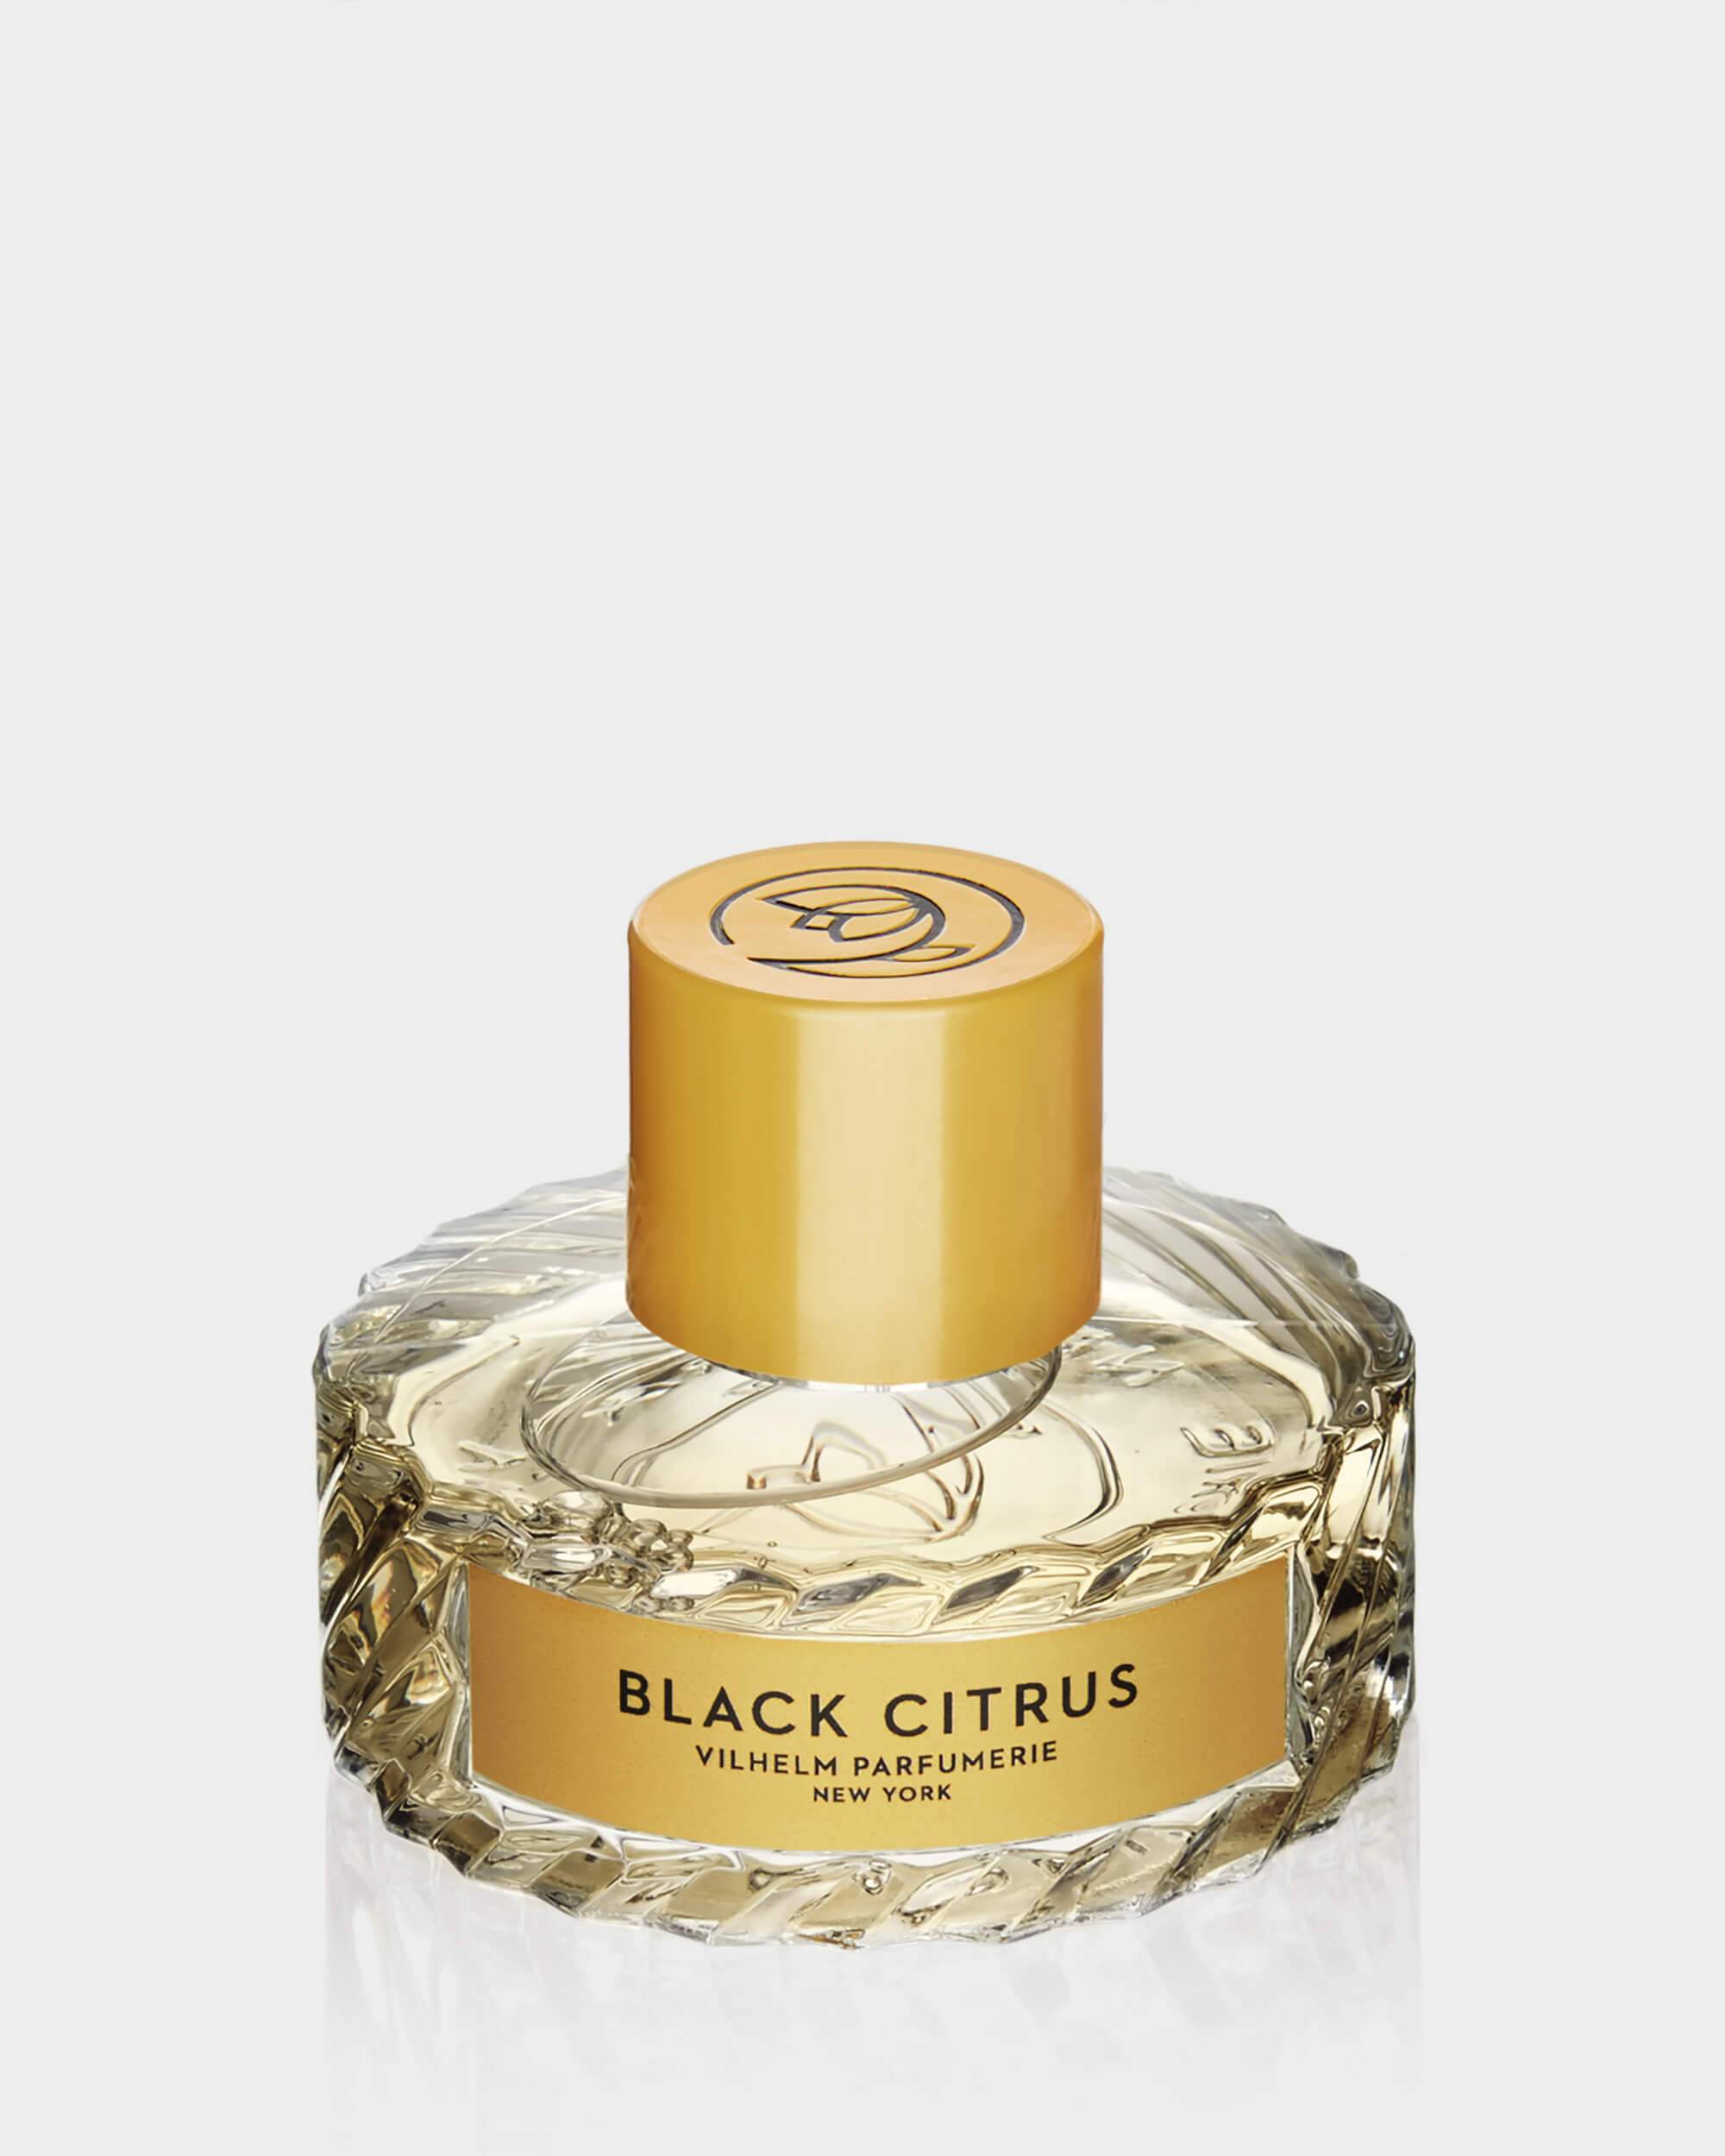 BLACK CITRUS - Vilhelm Parfumerie